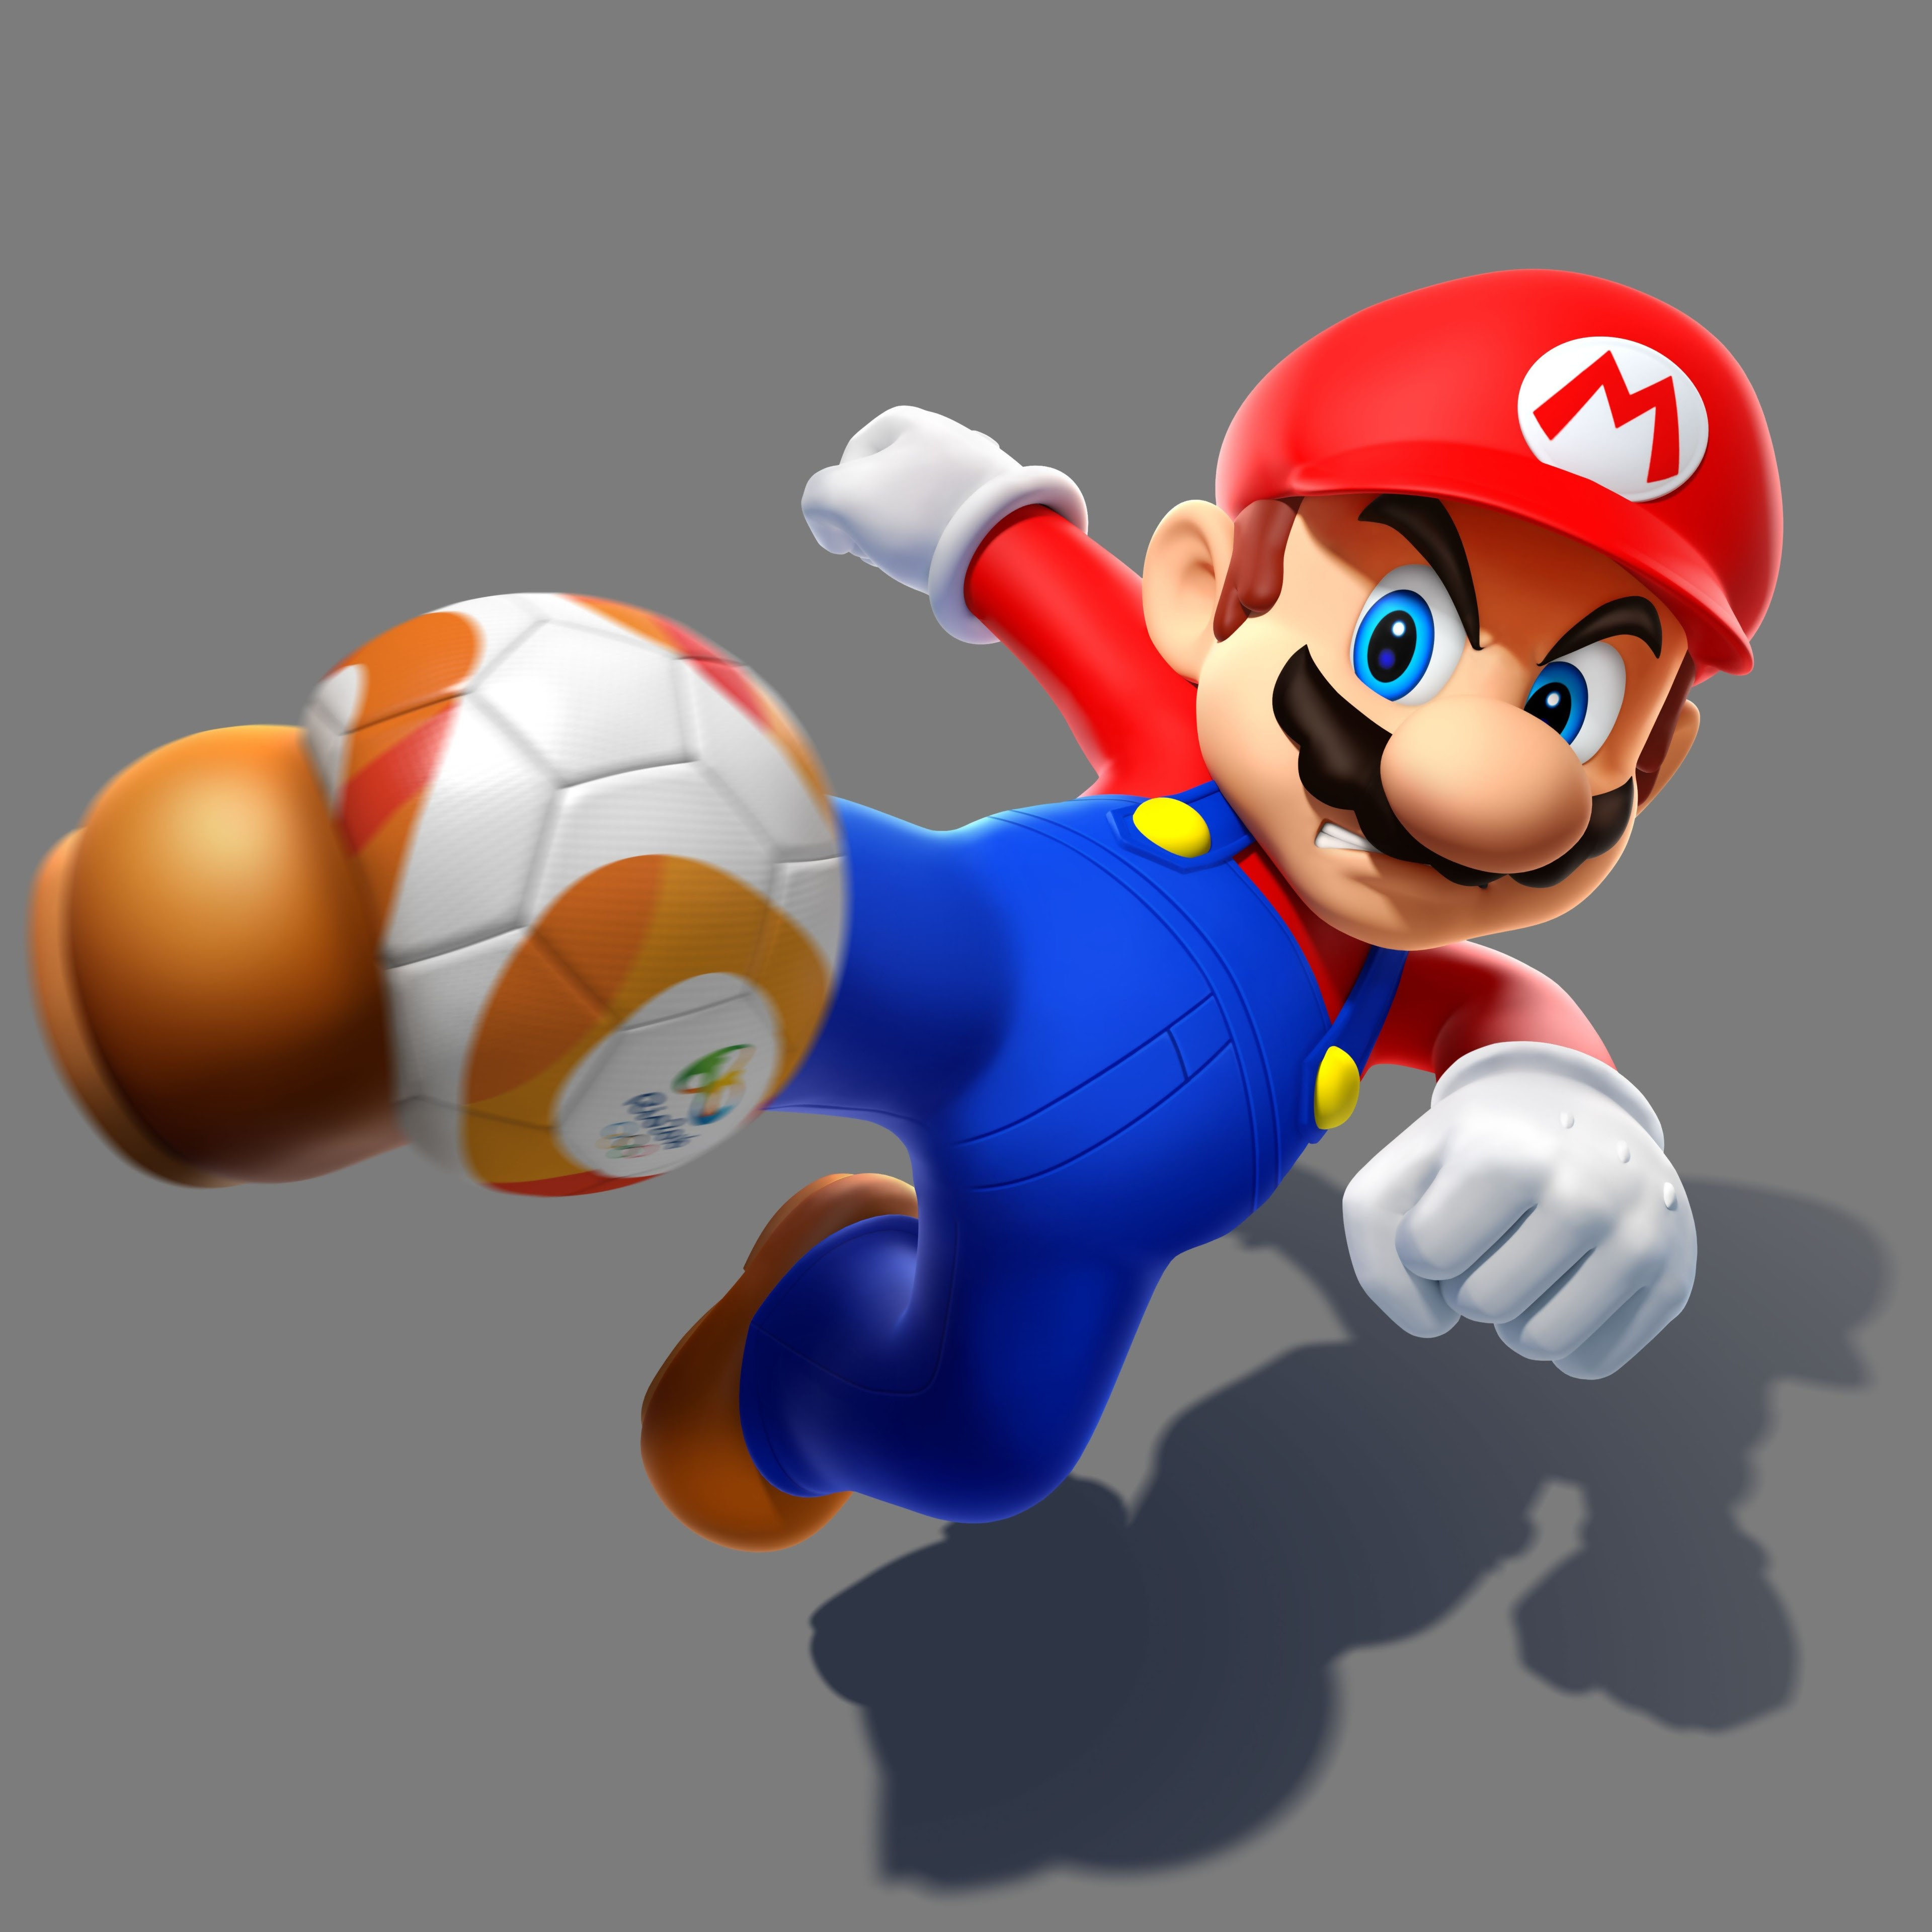 Super mario play. Марио (персонаж игр) персонажи игр Mario. Mario (медиафраншиза). Супер Марио персонажи. Марио (персонаж игр) Соник.